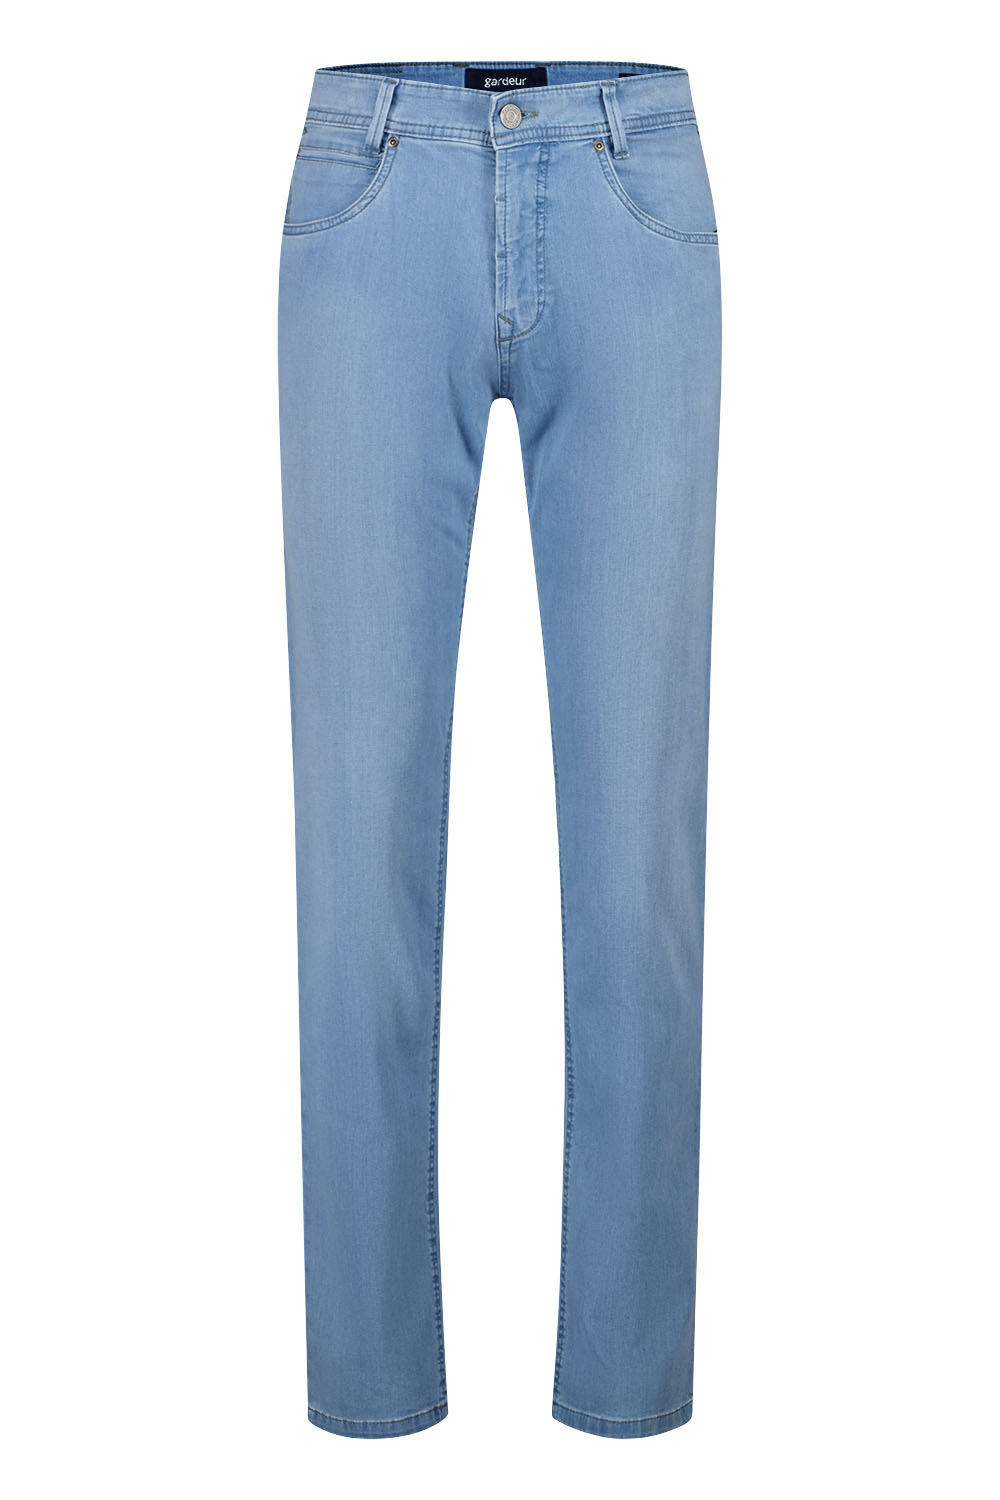 Gardeur - Bradley 5-Pocket Modern Fit Jeans Bleach - 35/34 - Heren